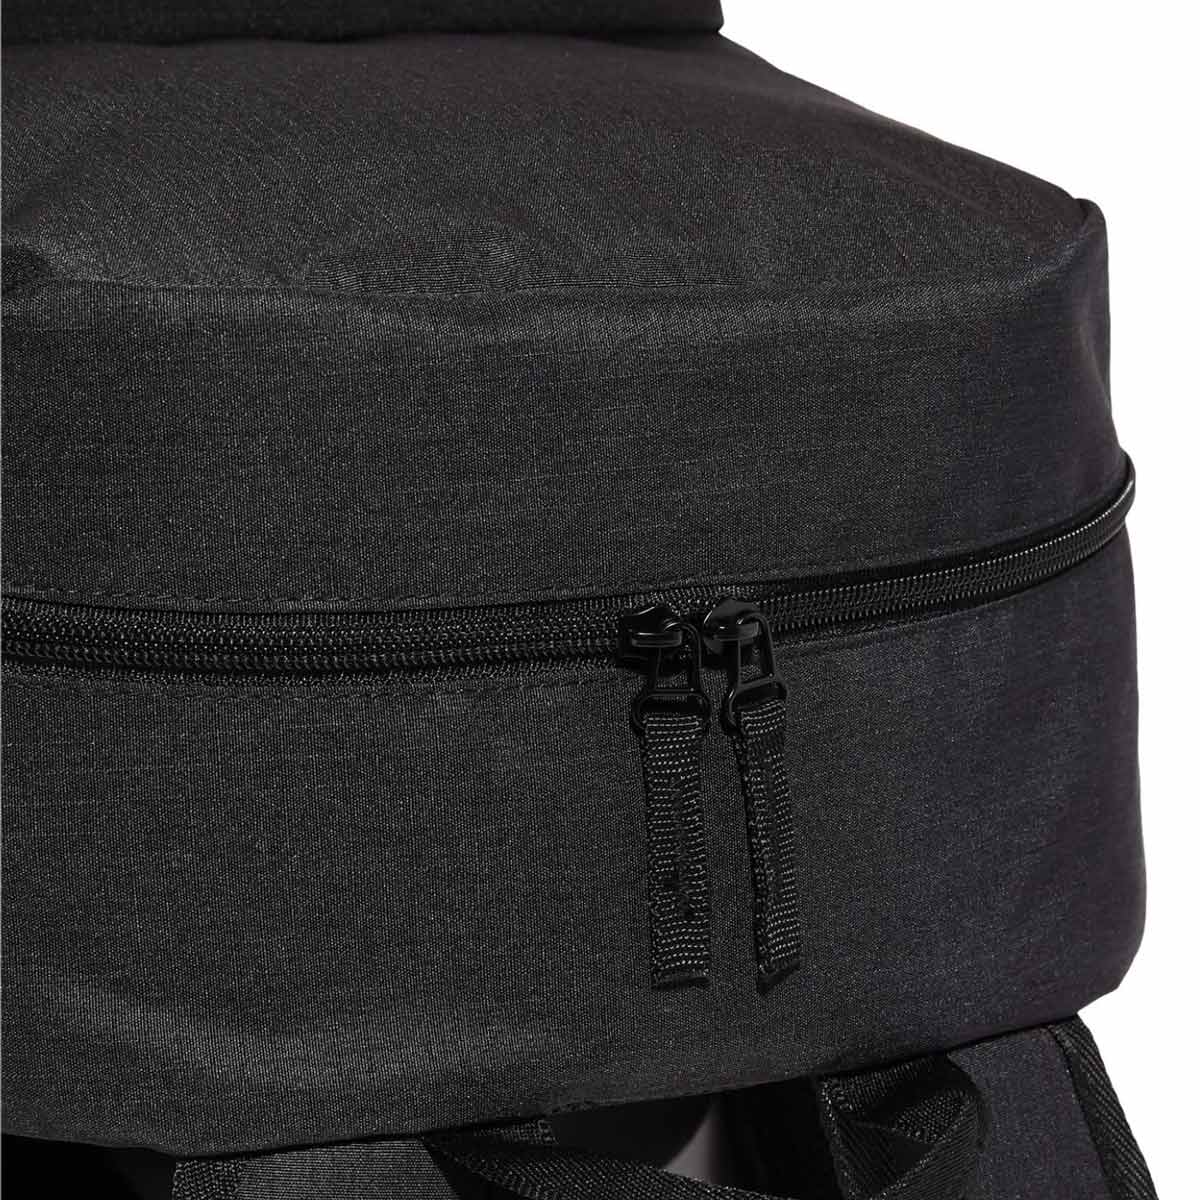 ASICS Backpack Sport Backpack black